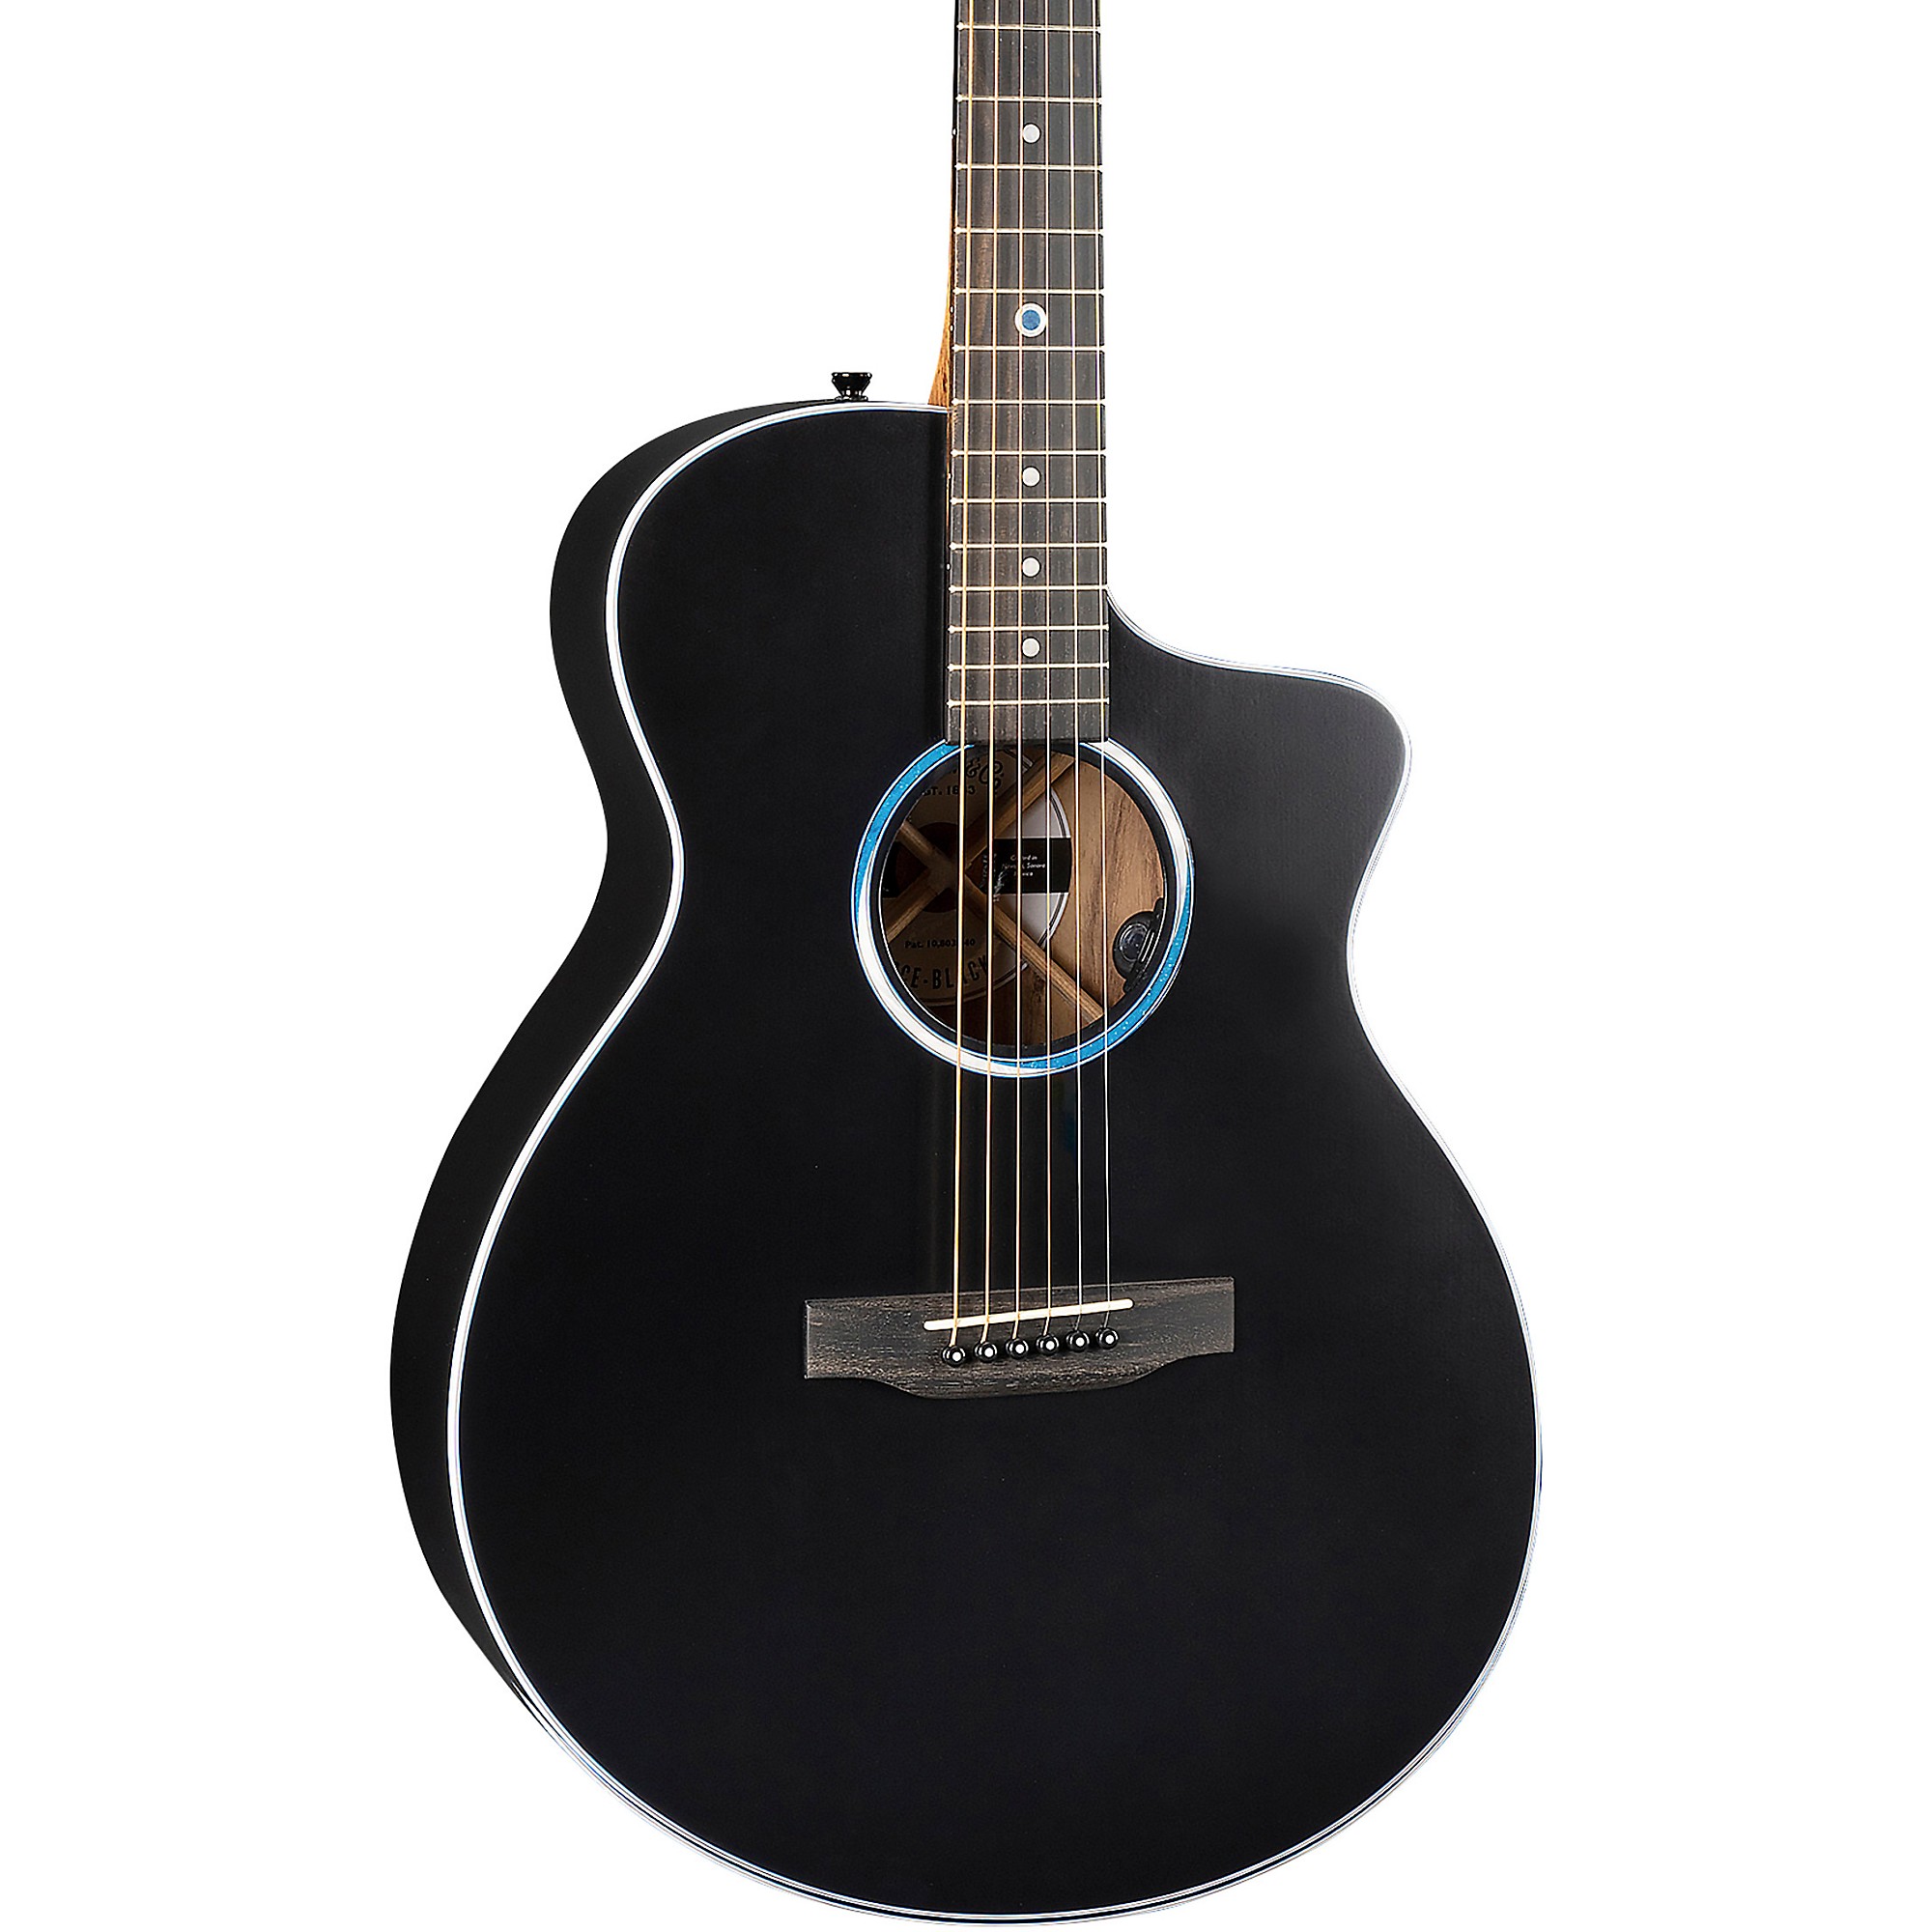 Акустически-электрическая гитара Martin SCE Custom Road Series Koa, черная